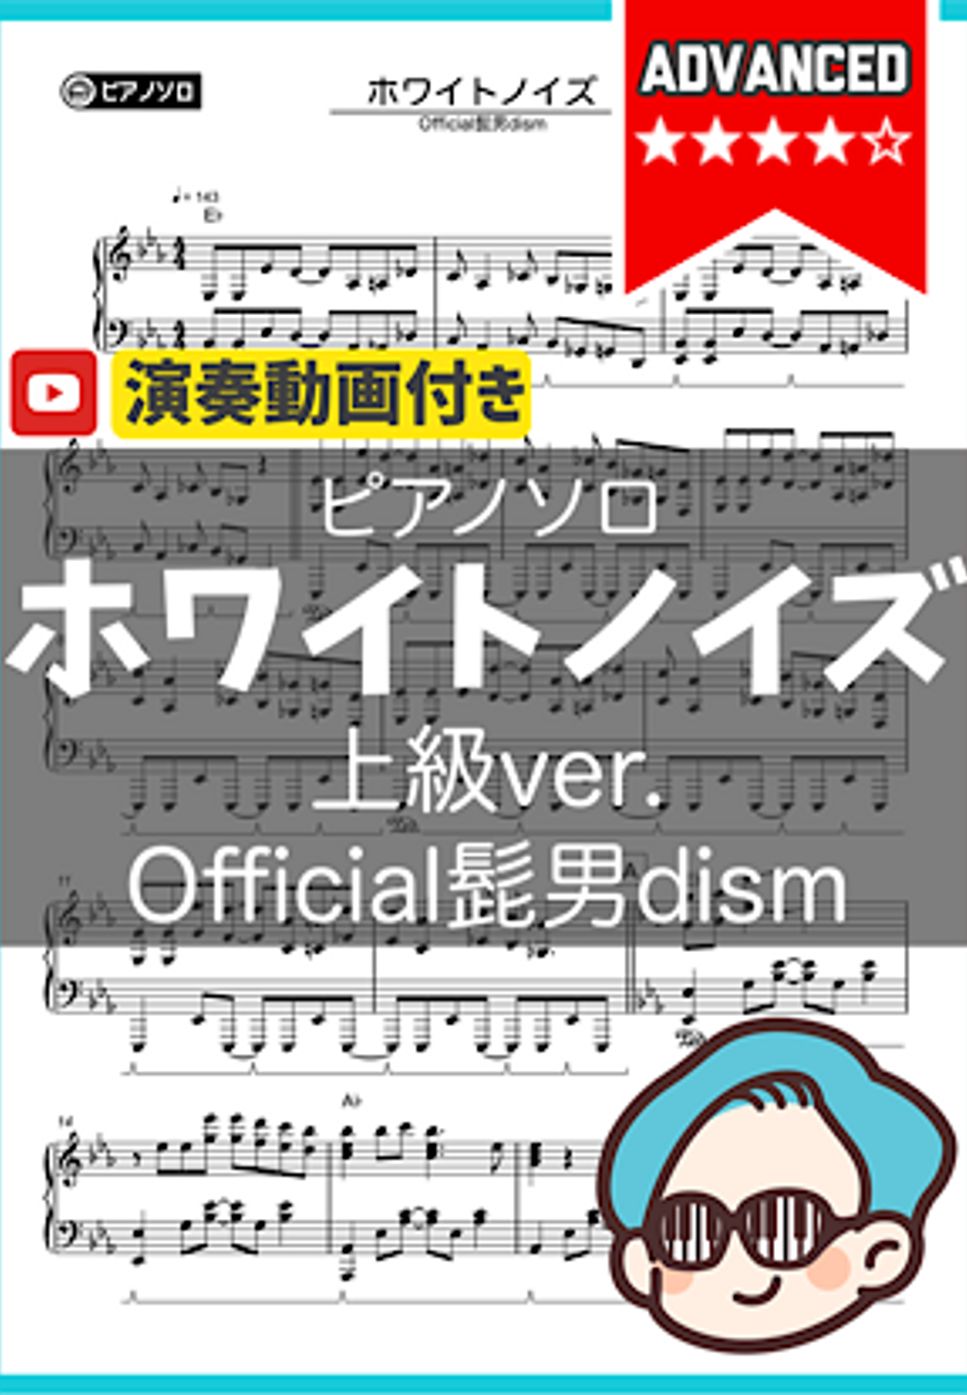 Official髭男dism - ホワイトノイズ(上級ver.) by シータピアノ